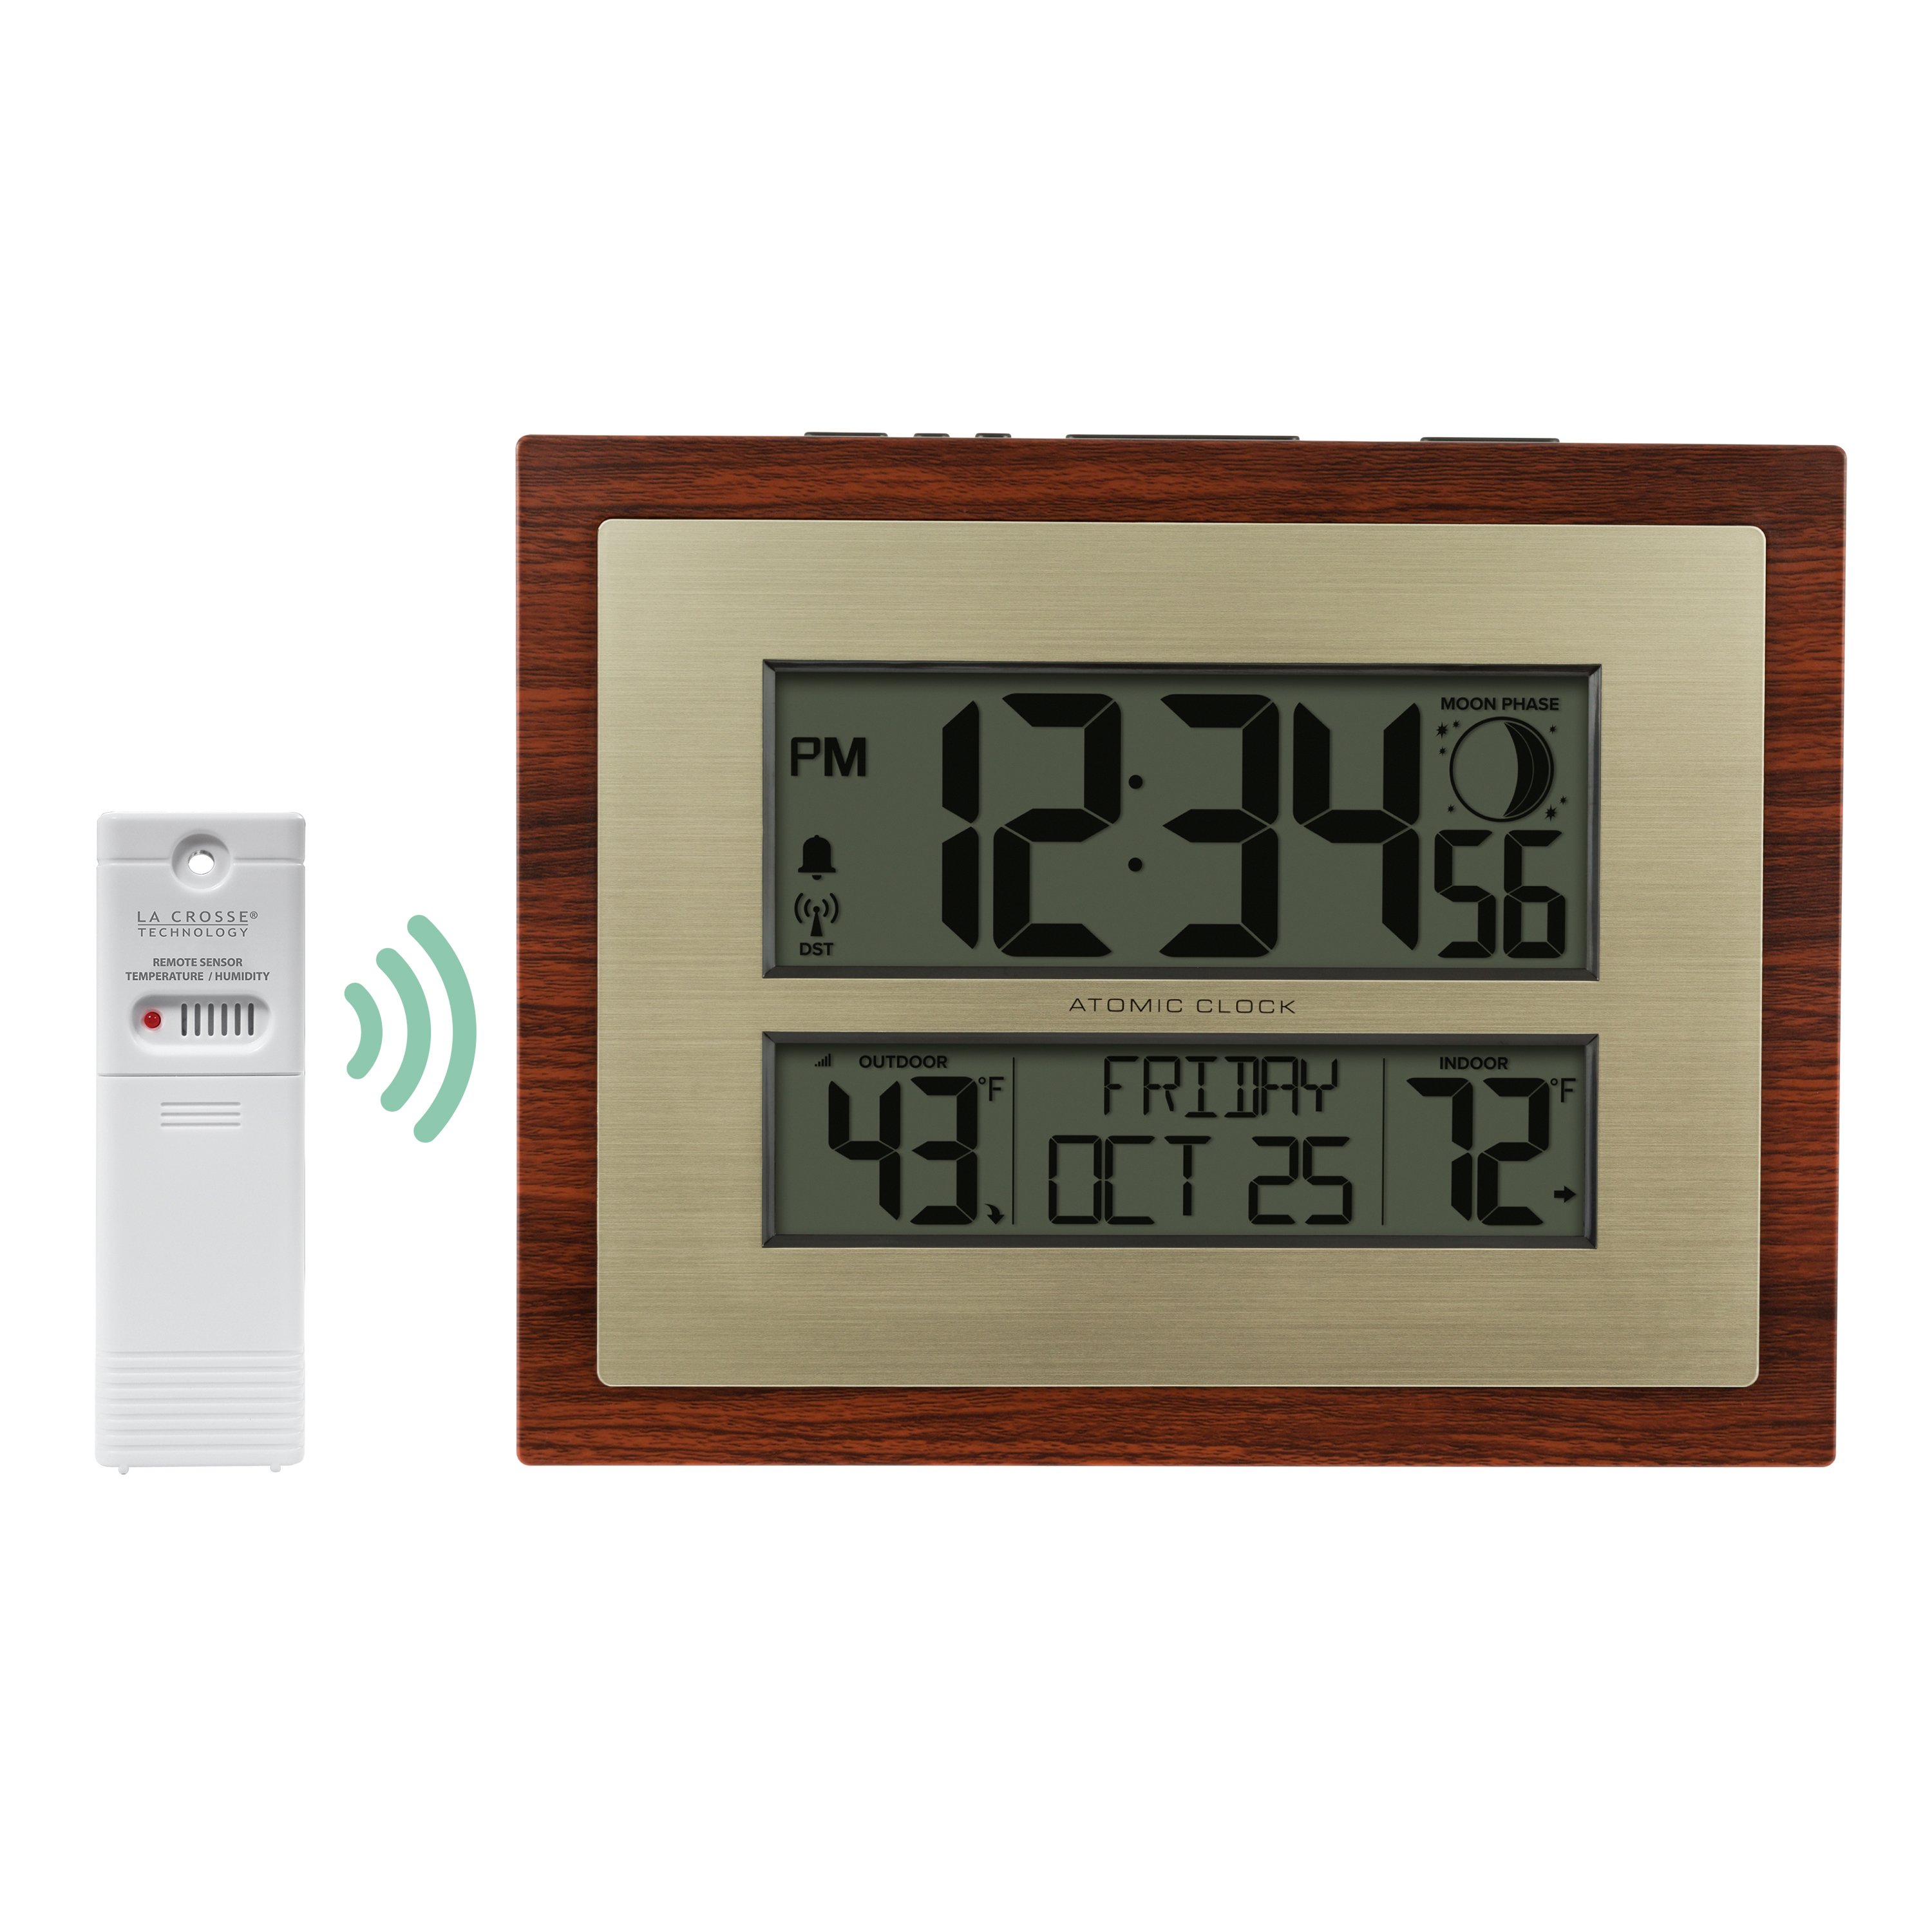 BHG Cherry Finish Modern Digital Atomic Clock with Temperature, W86111 - image 5 of 9